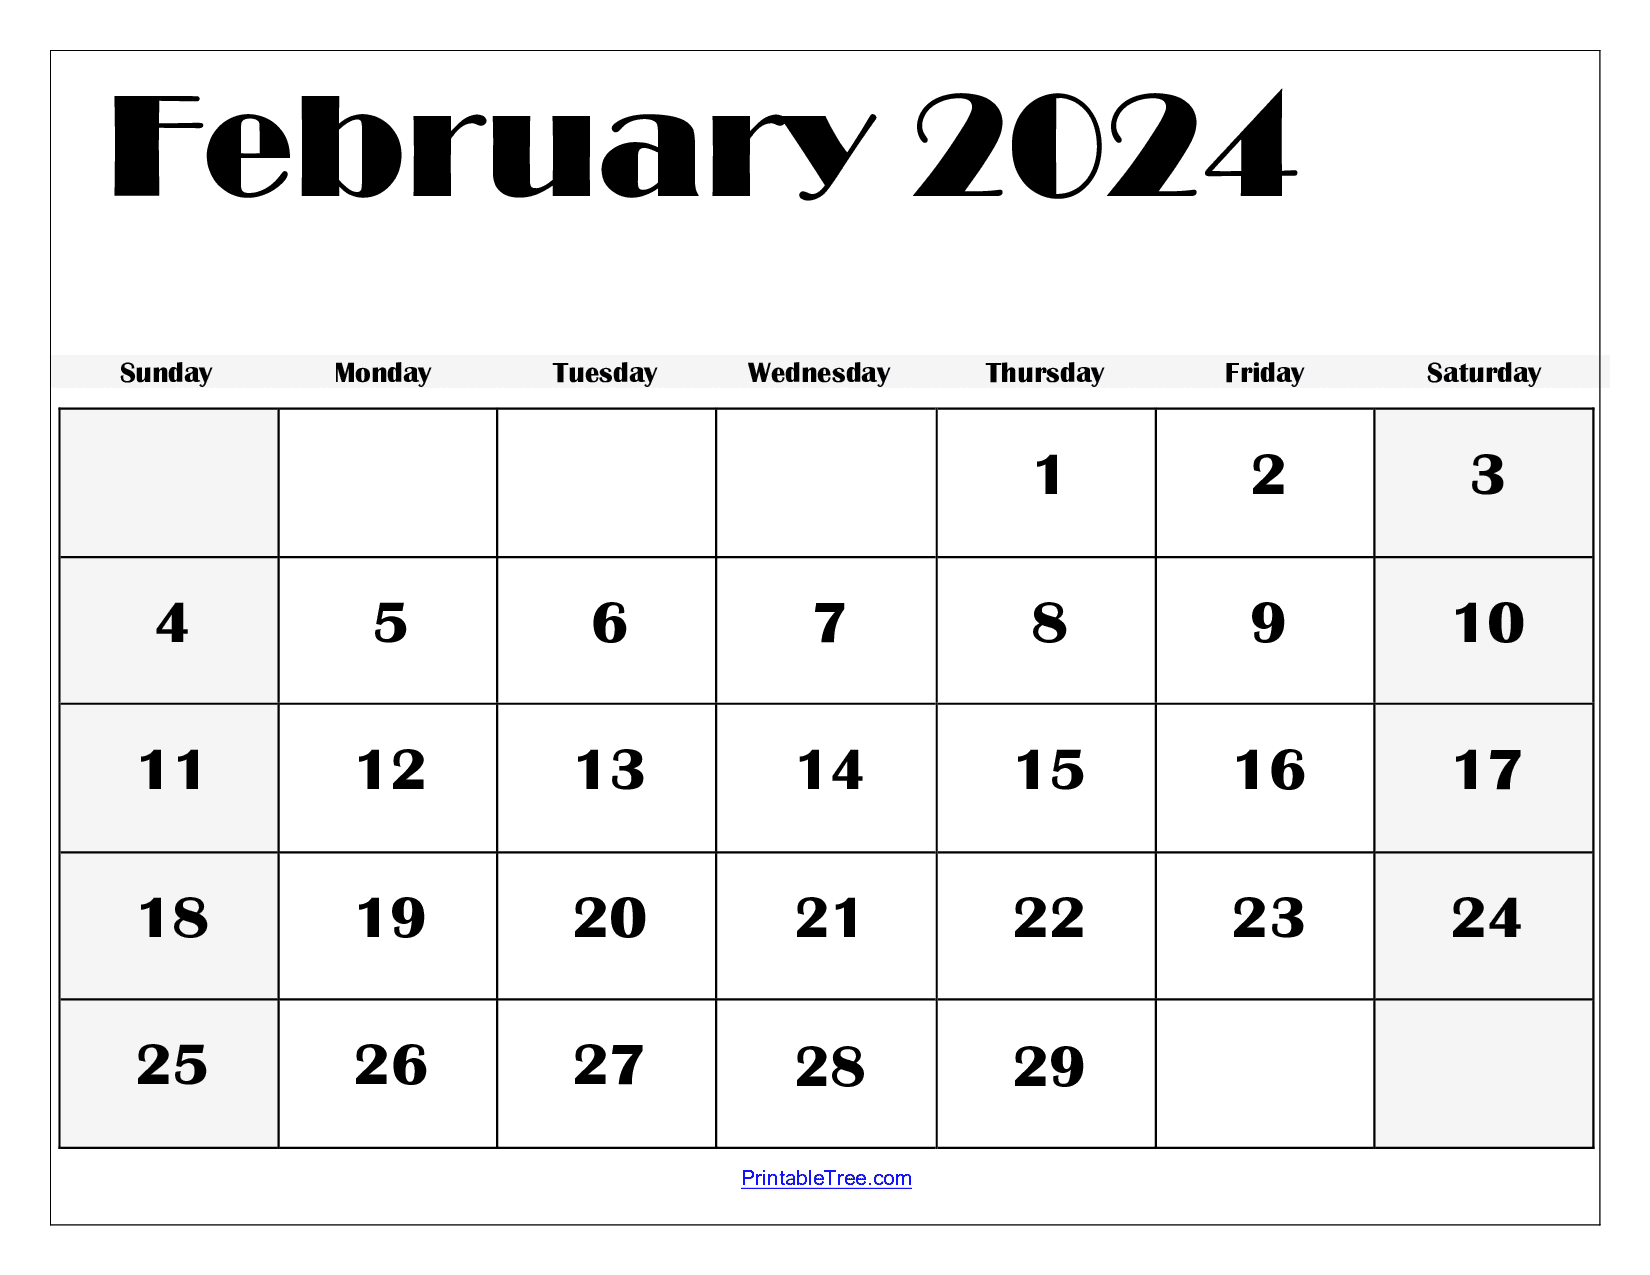 February 2024 Calendar Printable Pdf Template With Holidays for Printable Free Calendar February 2024